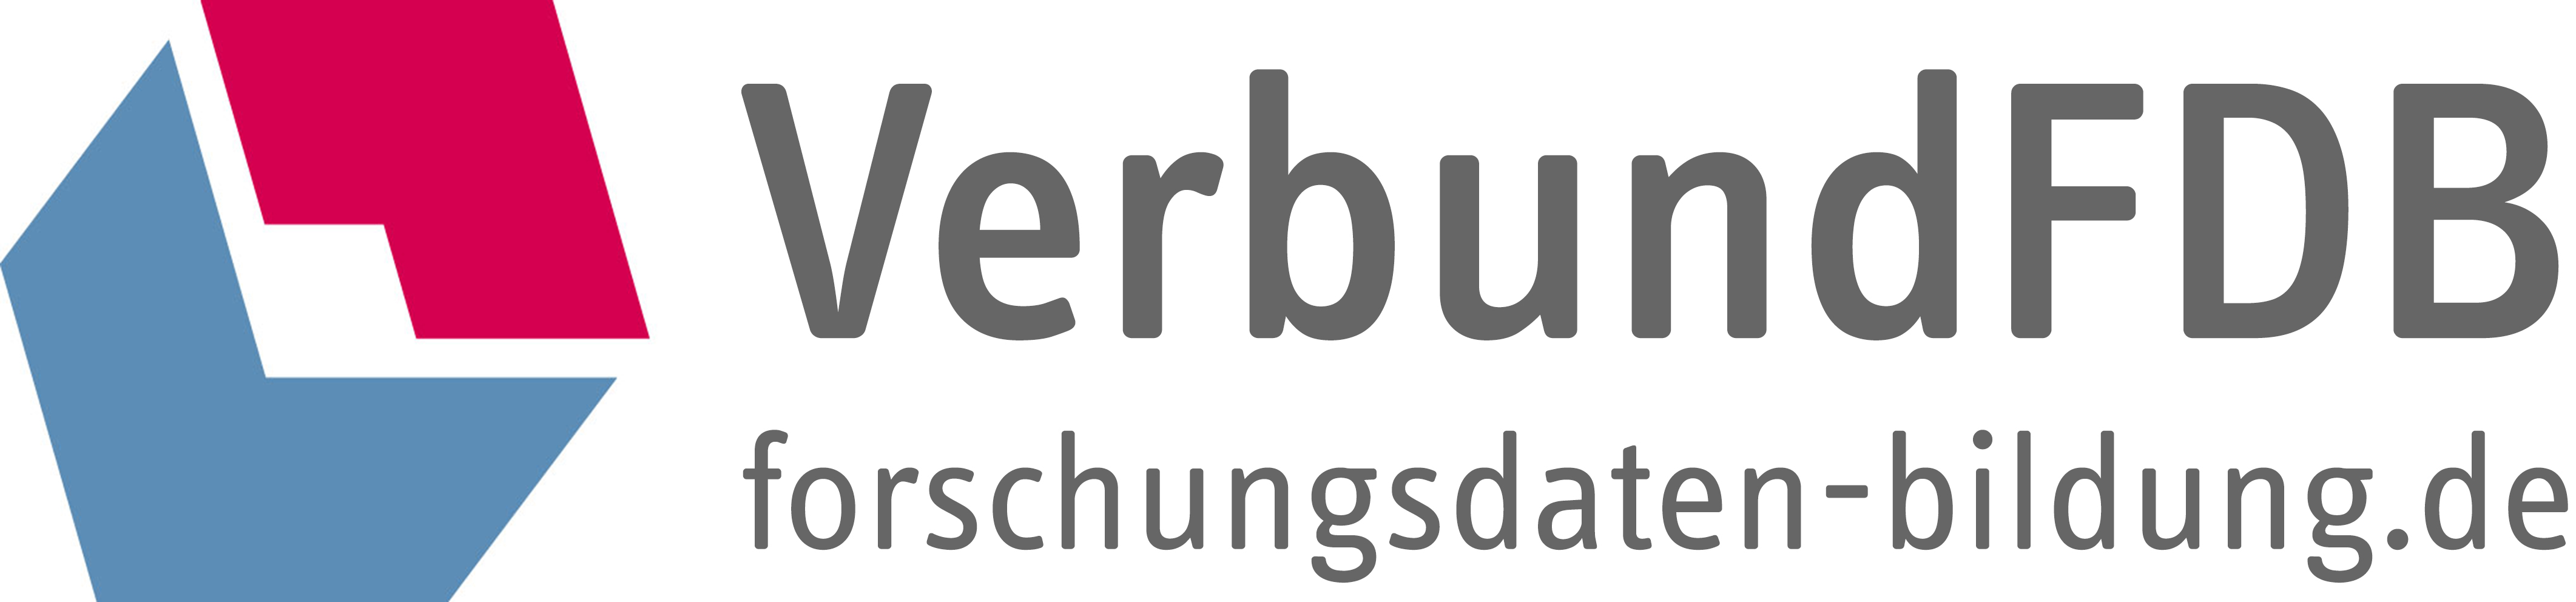 Logo_VerbundFDB_rgb.jpg